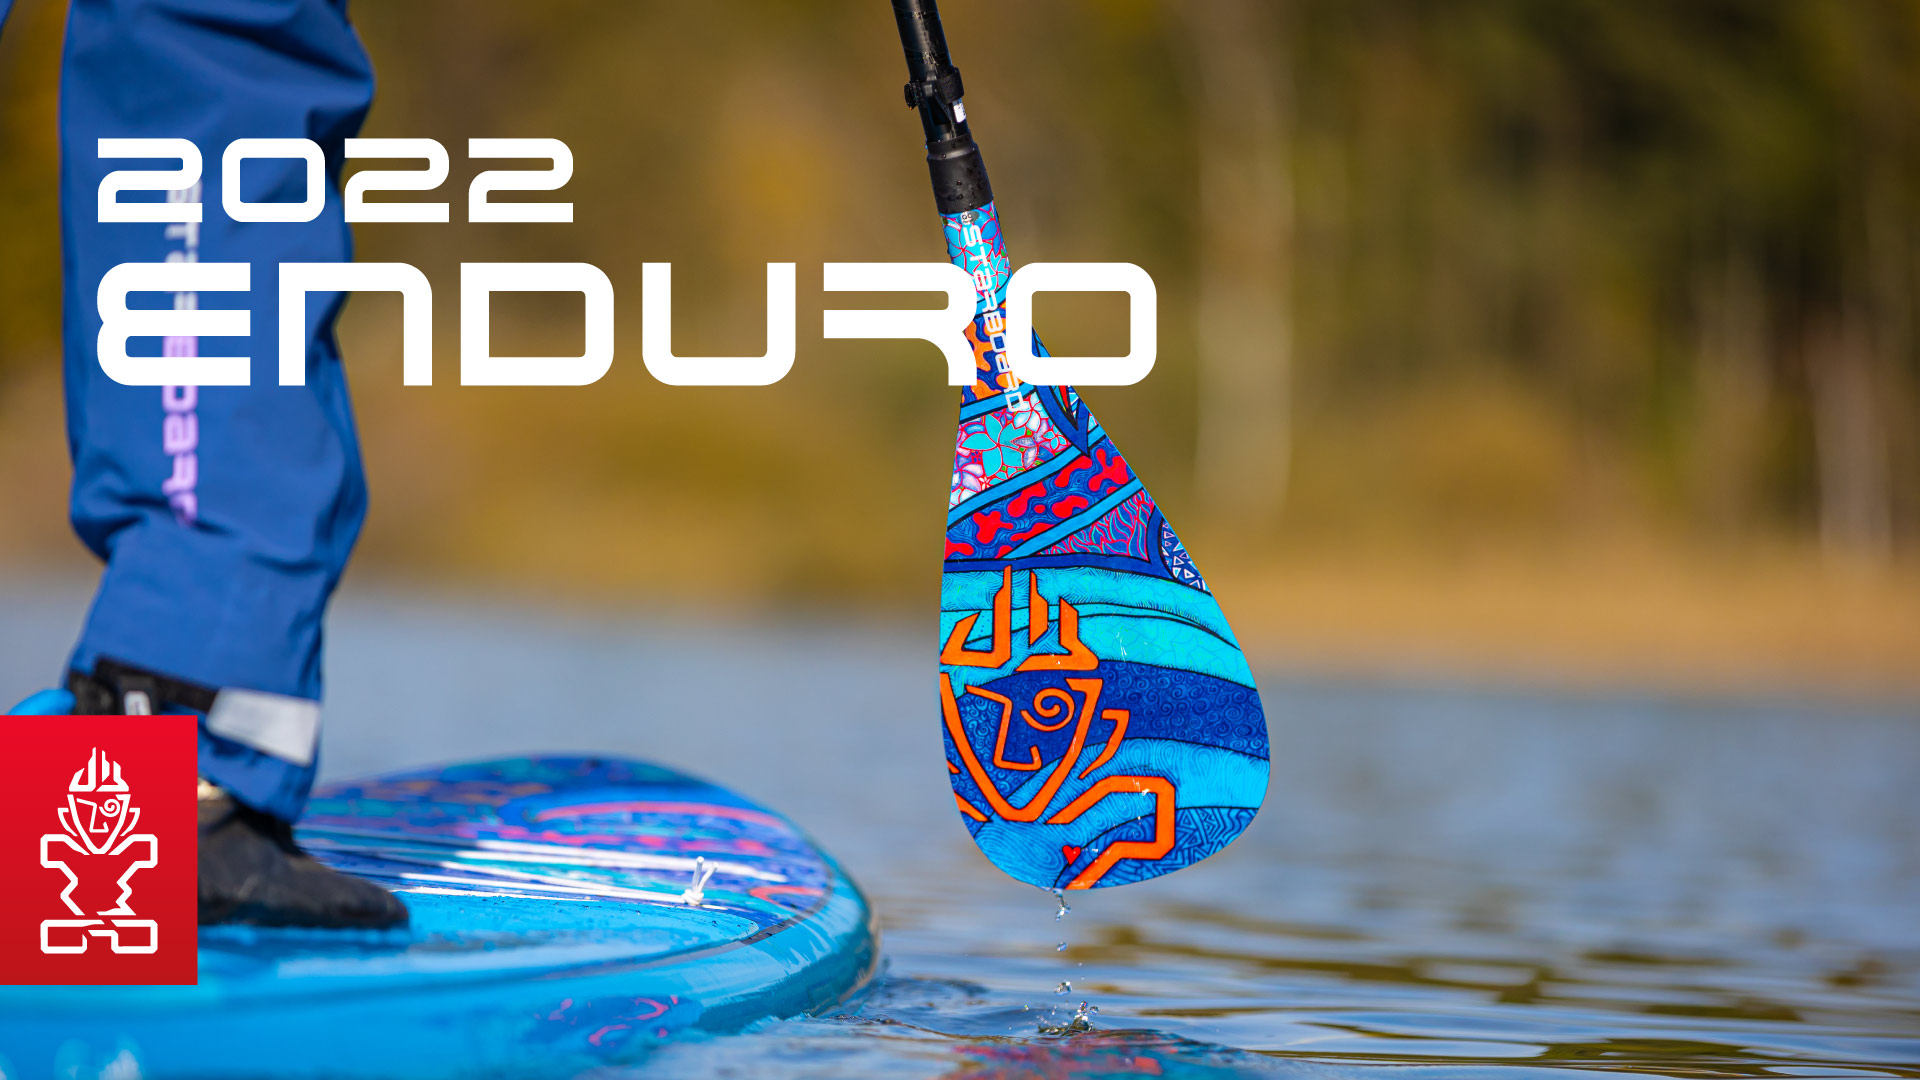 2022 Enduro Paddle » Starboard SUP